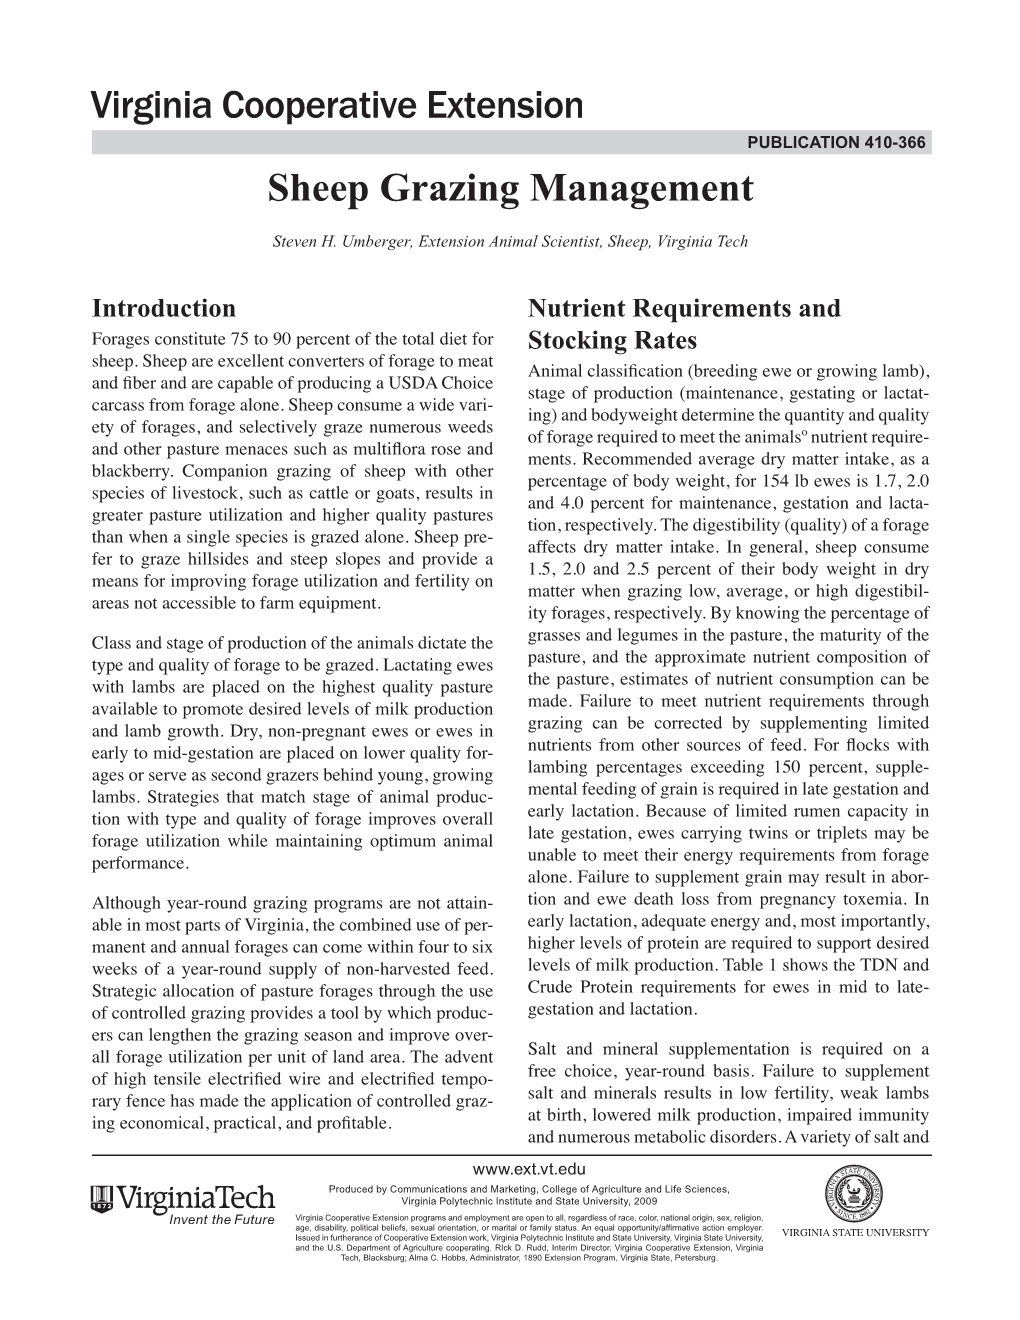 Sheep Grazing Management